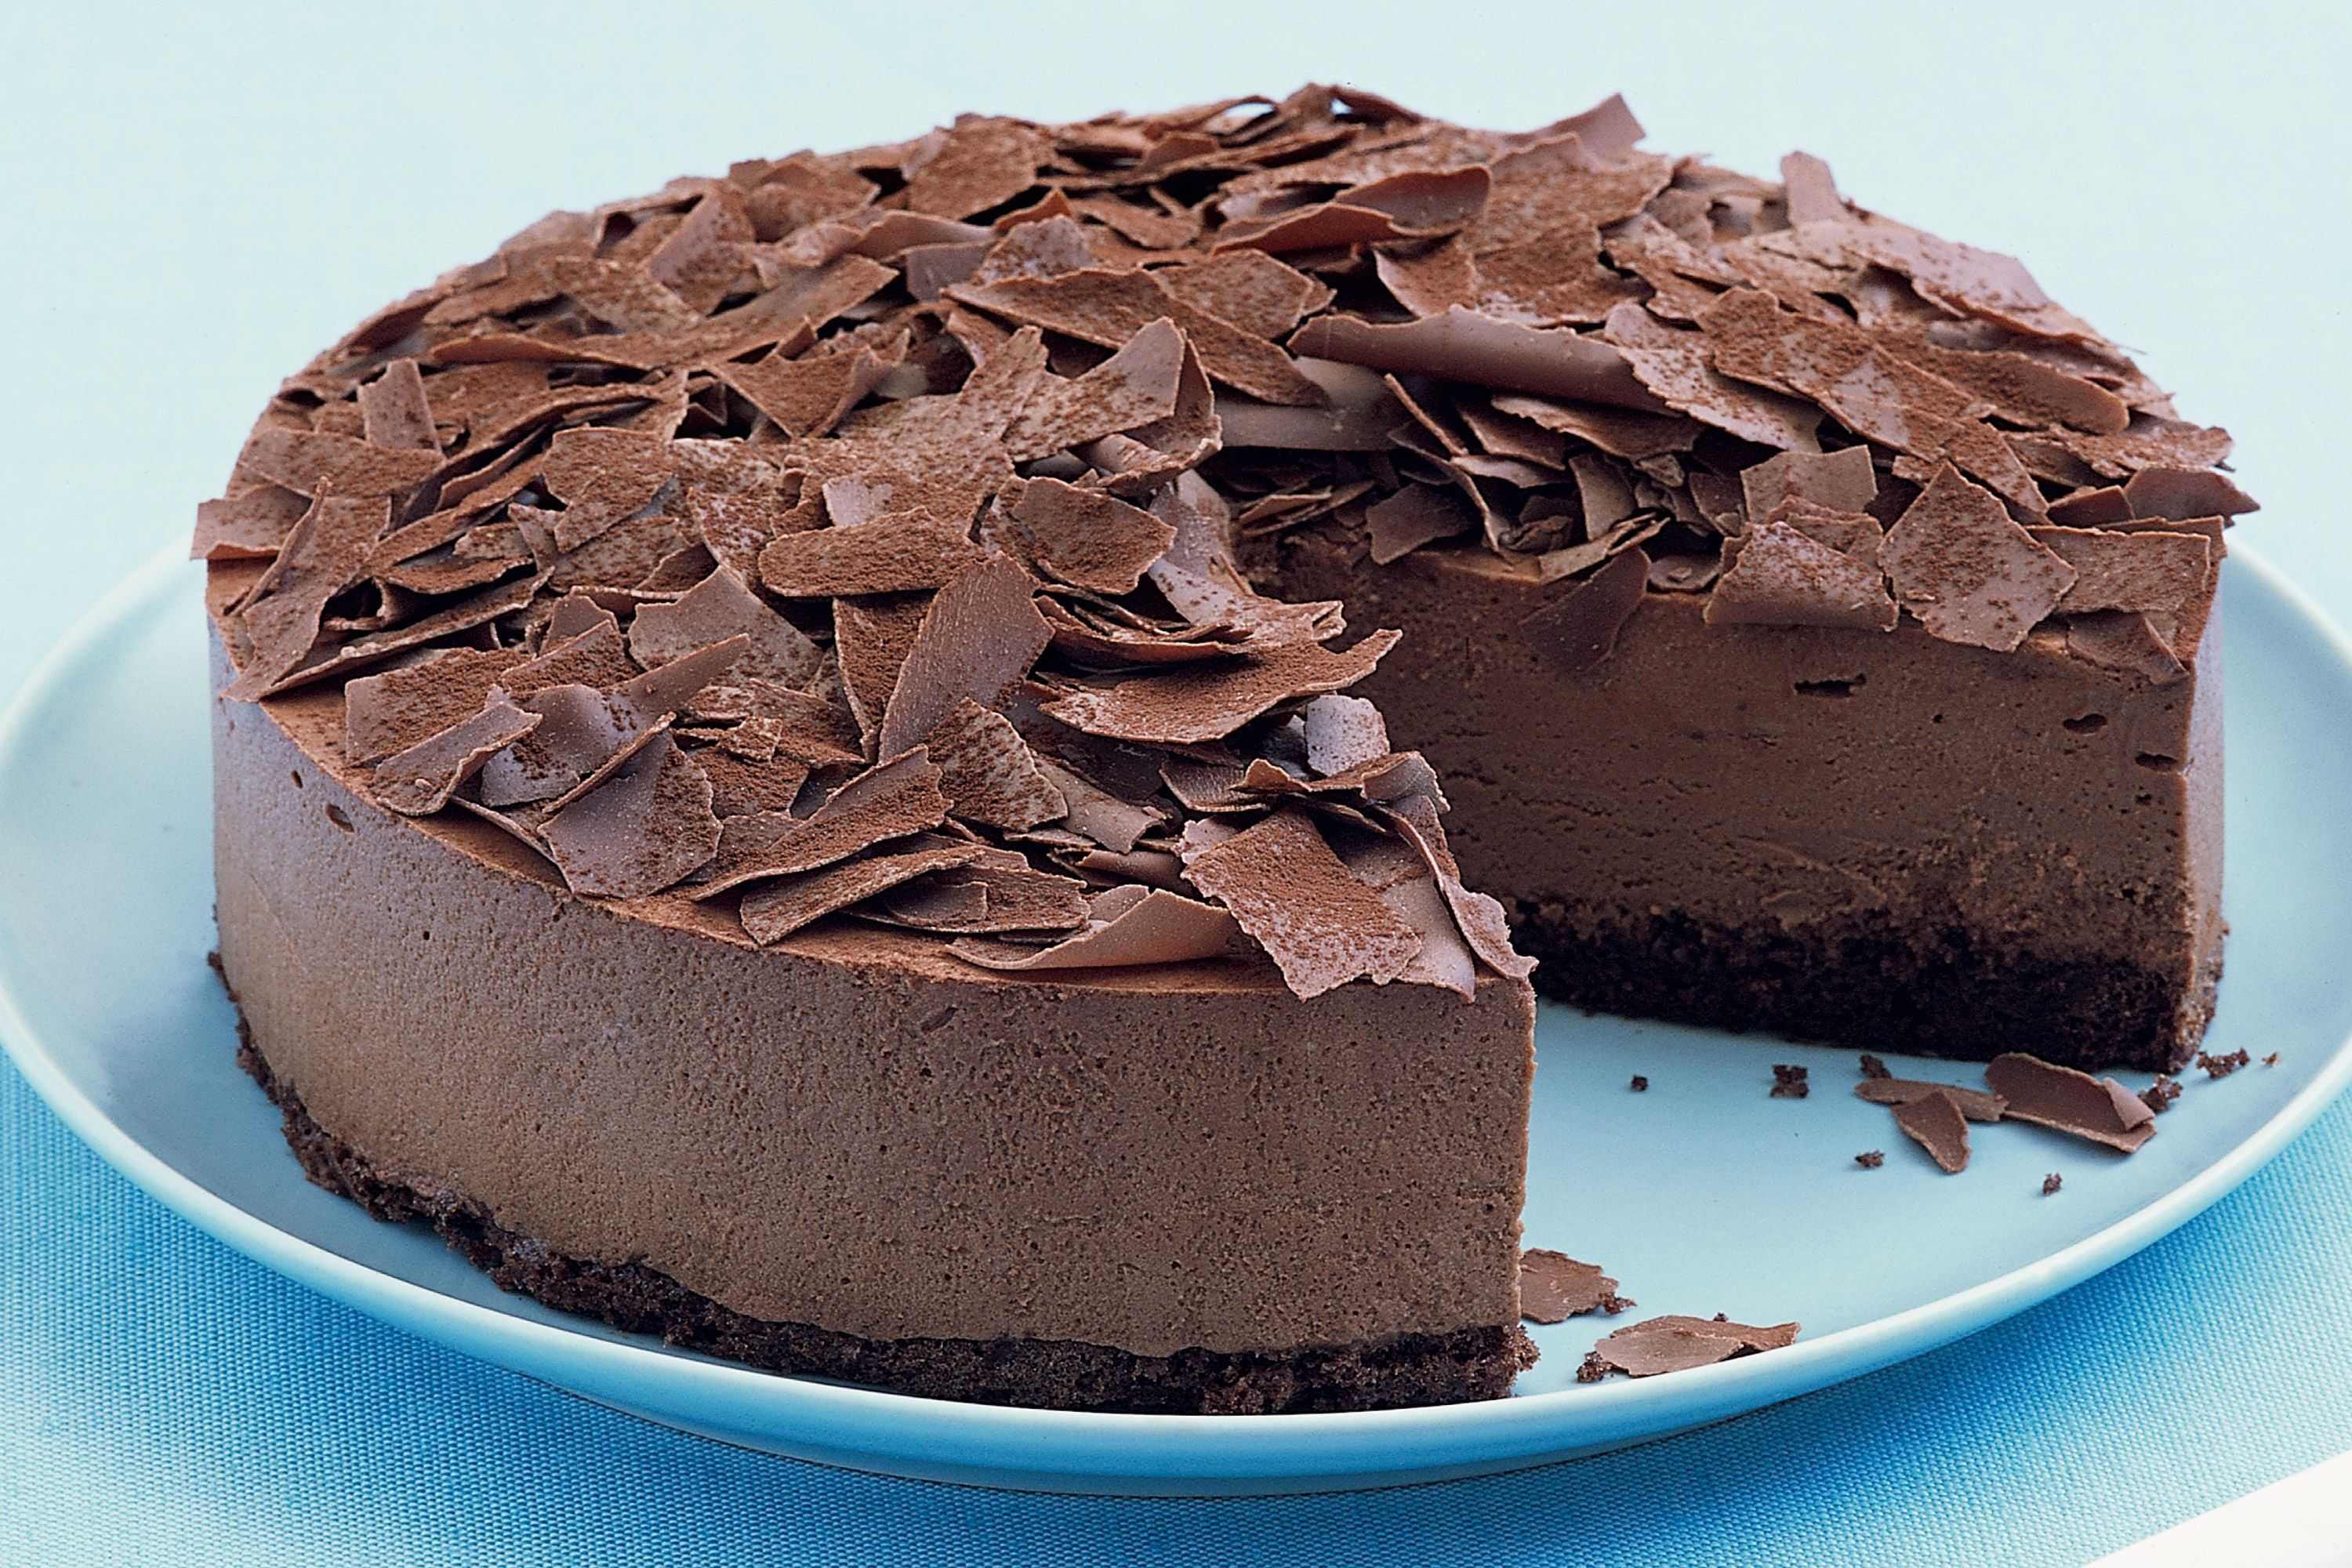 Шоколадный торт желатин. Шоколадный мусс для торта. Шоколадный мусс кейк. Торт суфле Ниигата. Чизкейк шоколадный.